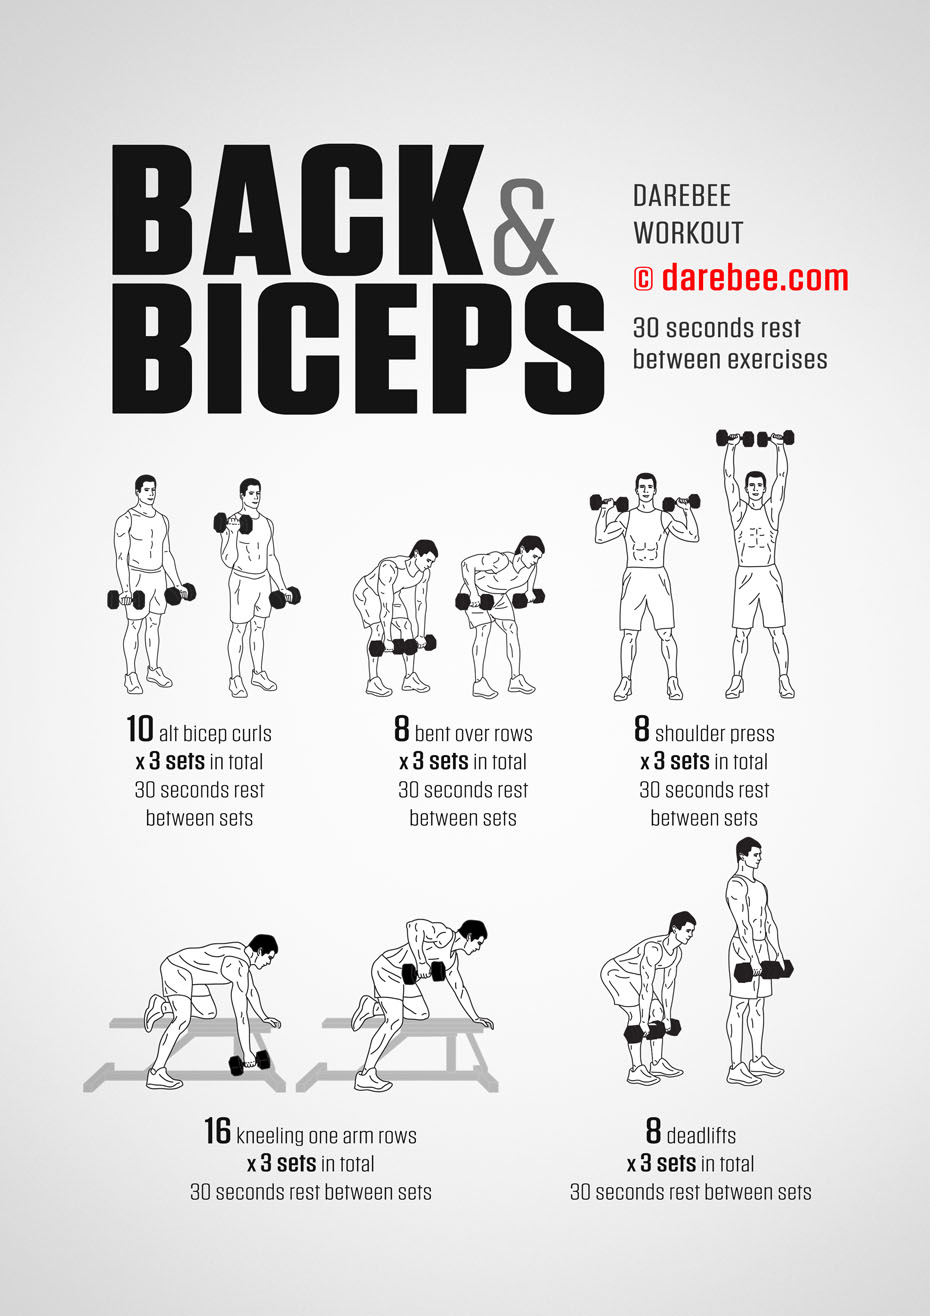 Back & Biceps Workout